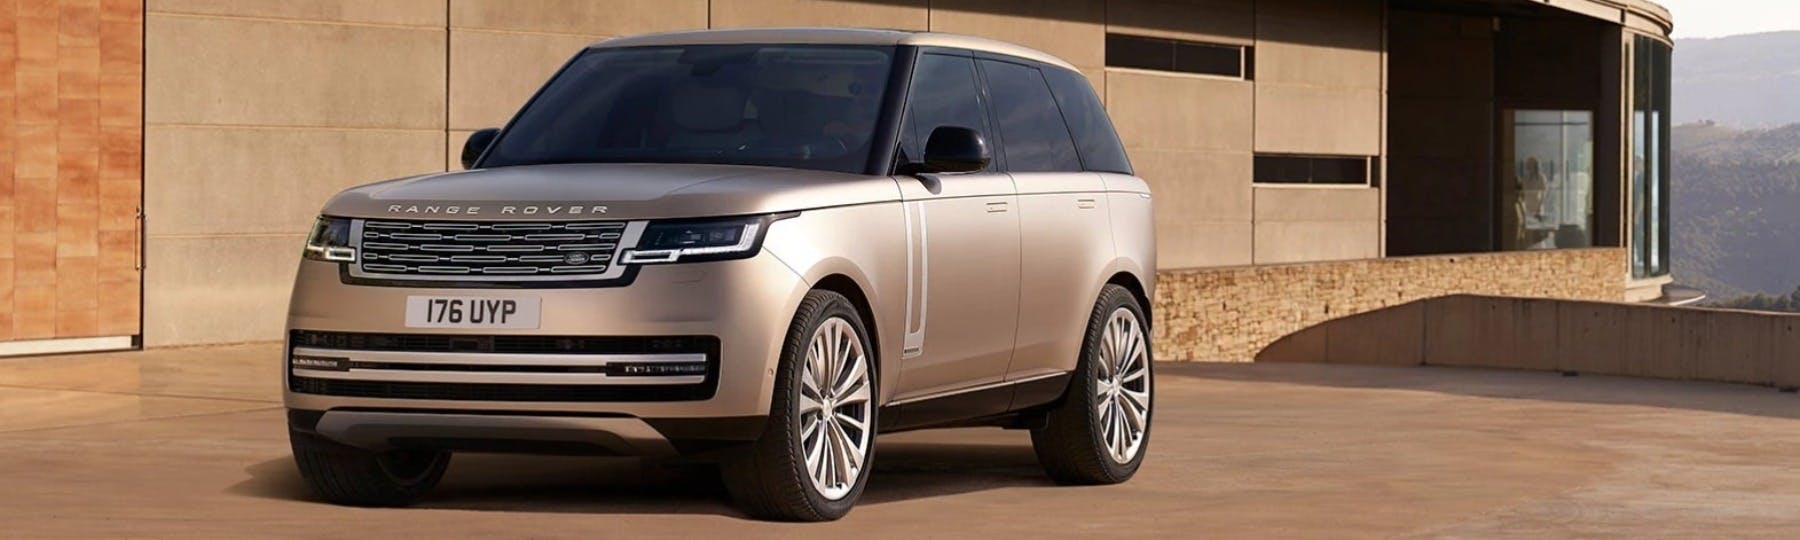 New Land Rover Range Rover New Car Offer